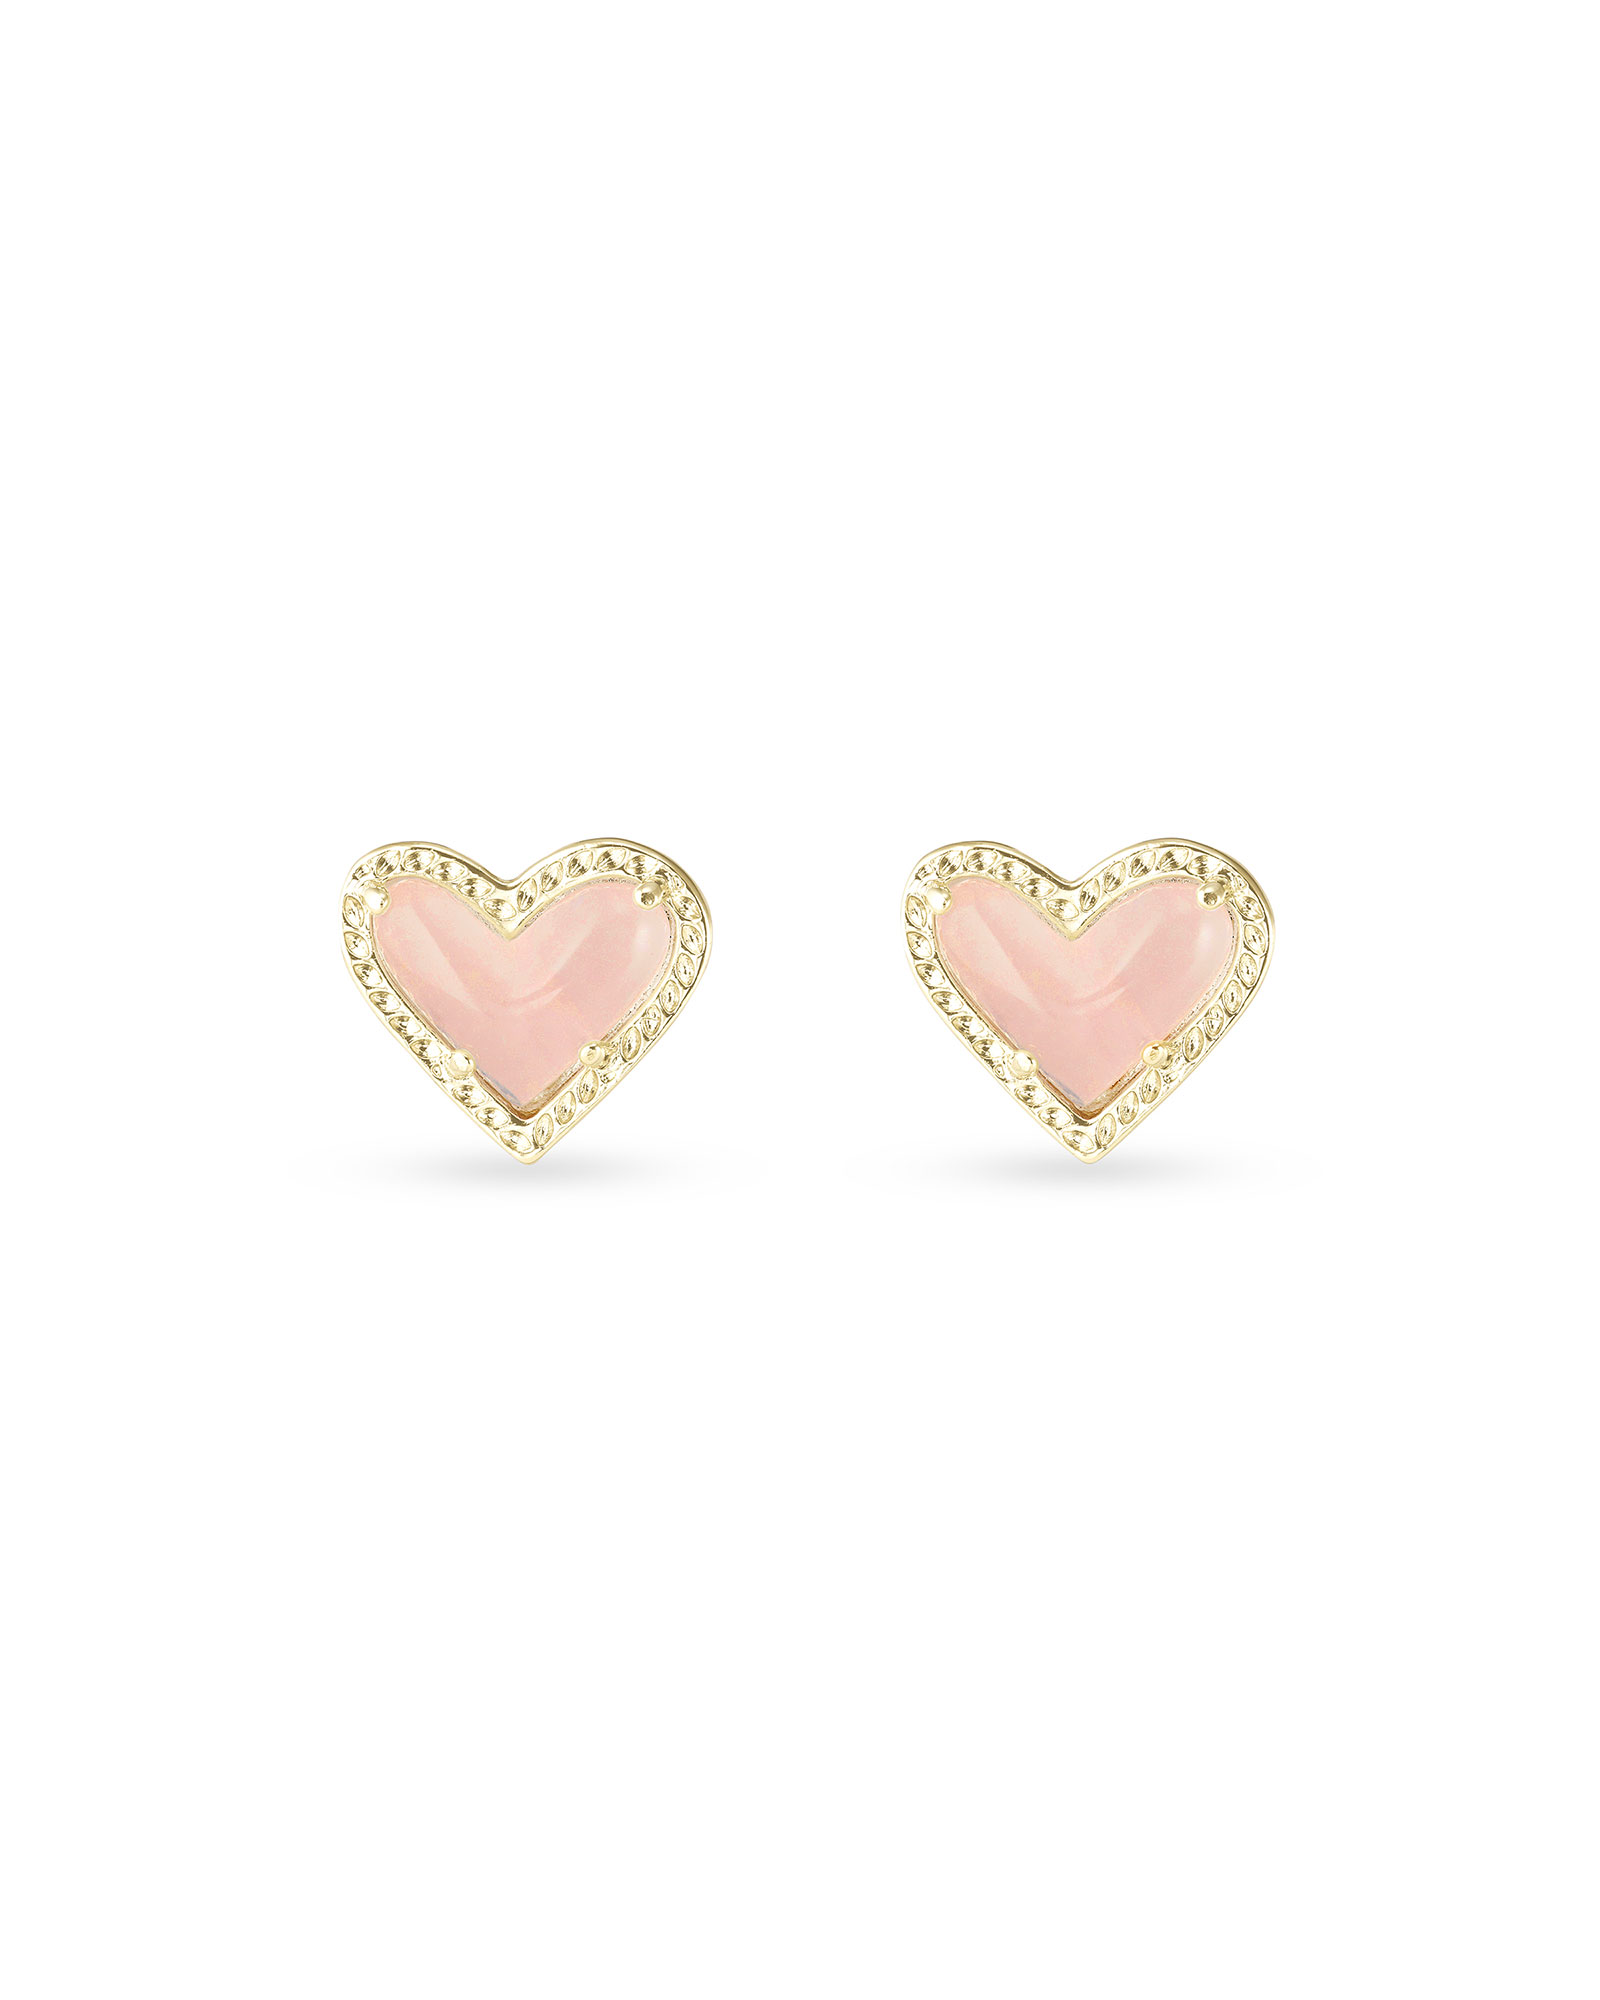 Ari Heart Gold Stud Earrings in Rose Quartz | Kendra Scott